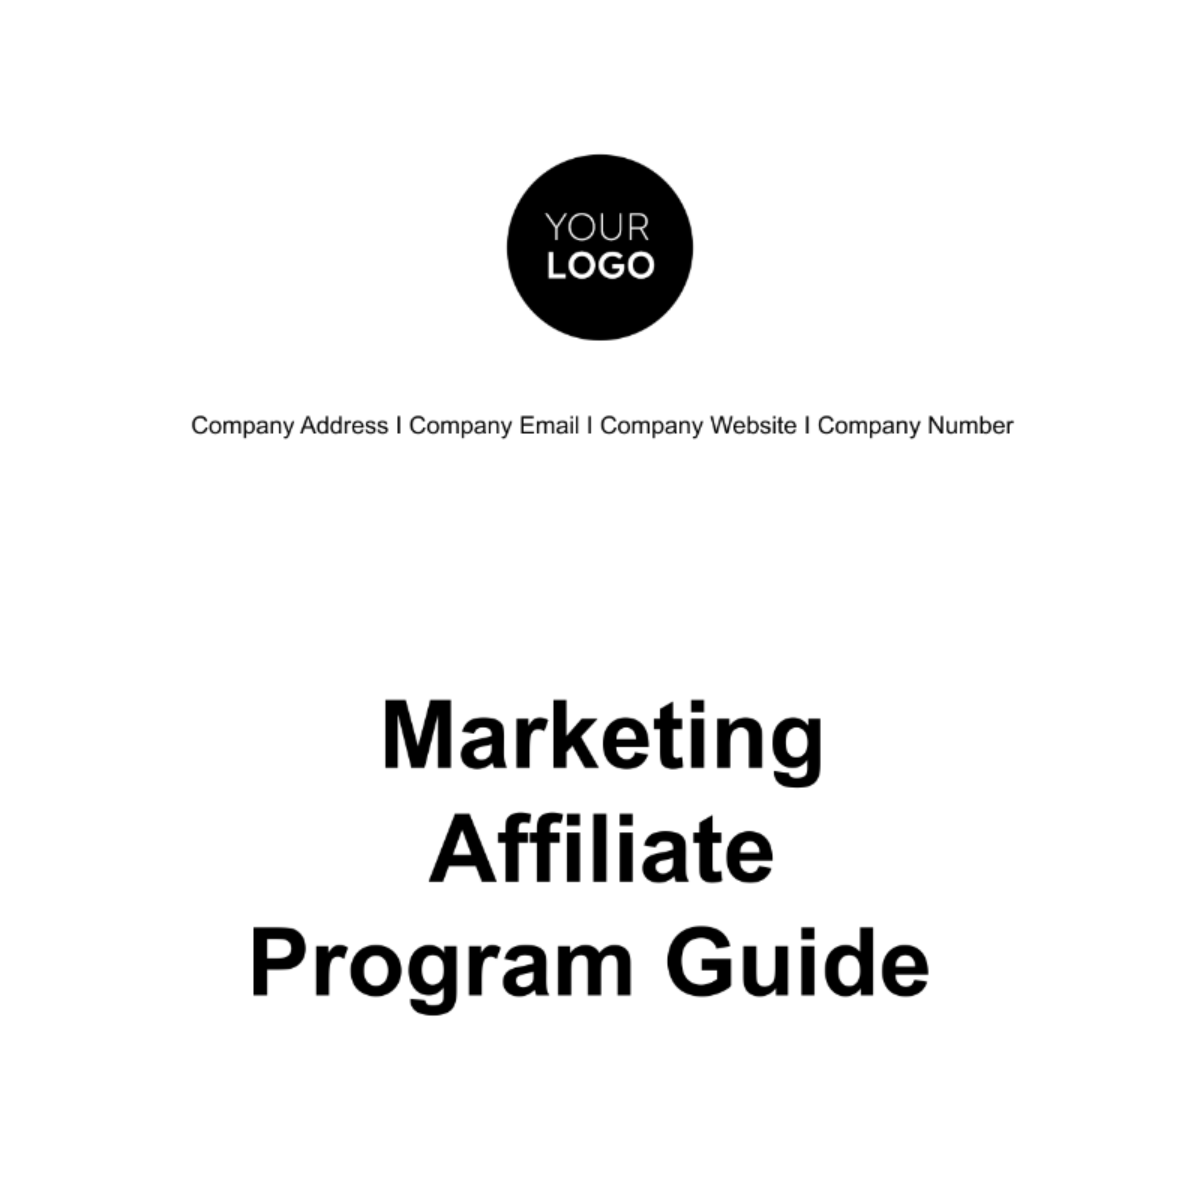 Marketing Affiliate Program Guide Template